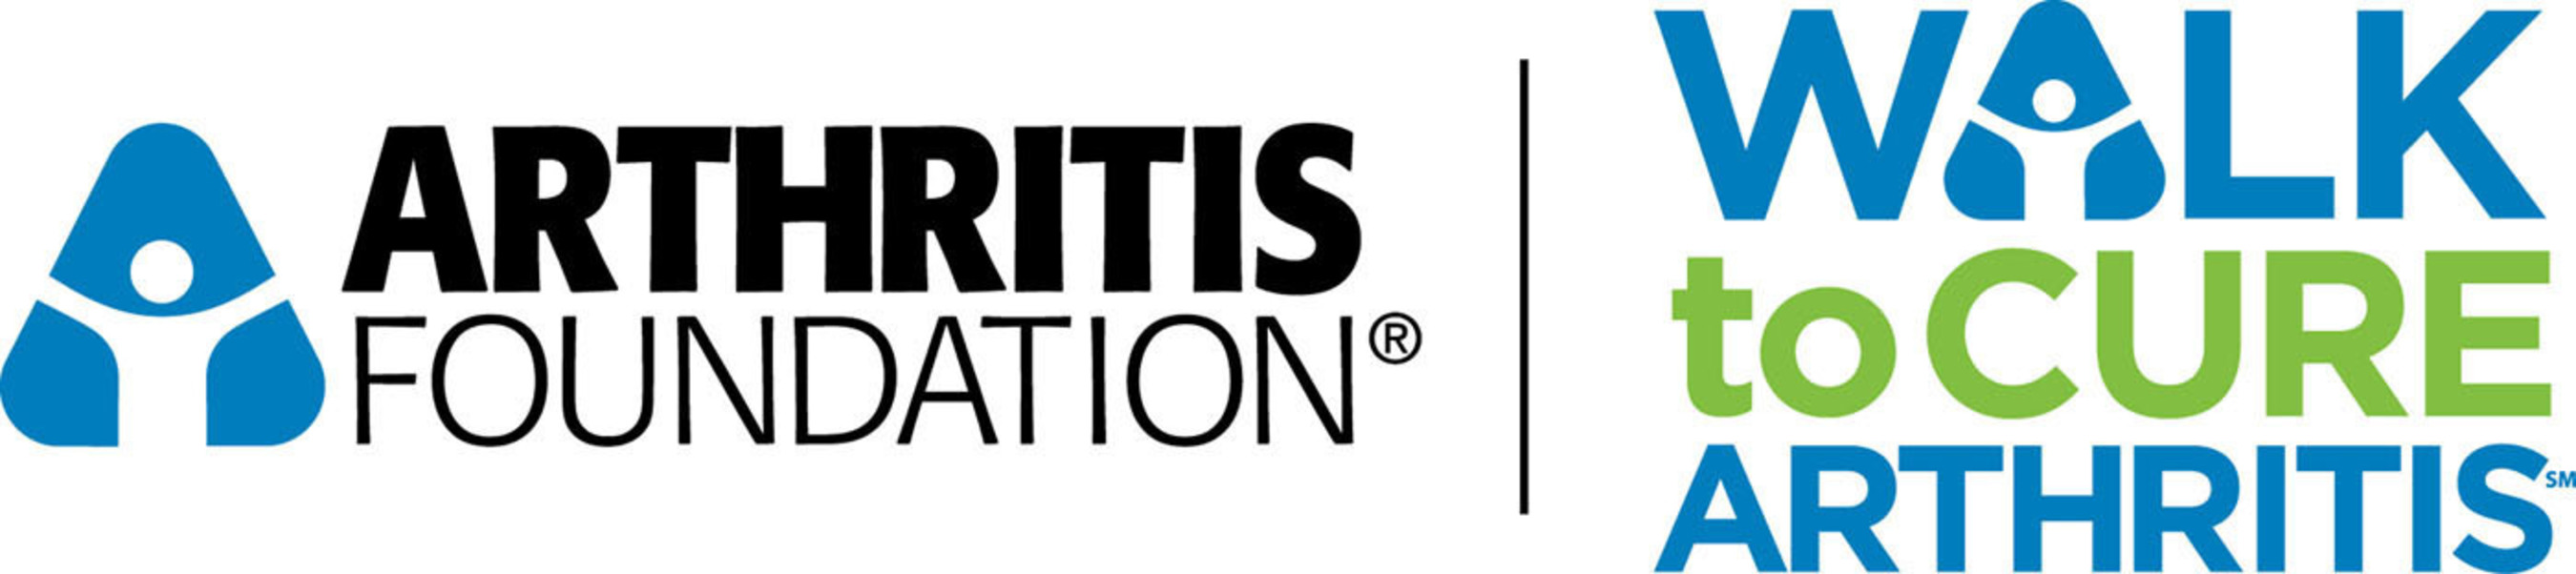 Walk to Cure Arthritis Logo. (PRNewsFoto/Arthritis Foundation) (PRNewsFoto/ARTHRITIS FOUNDATION)